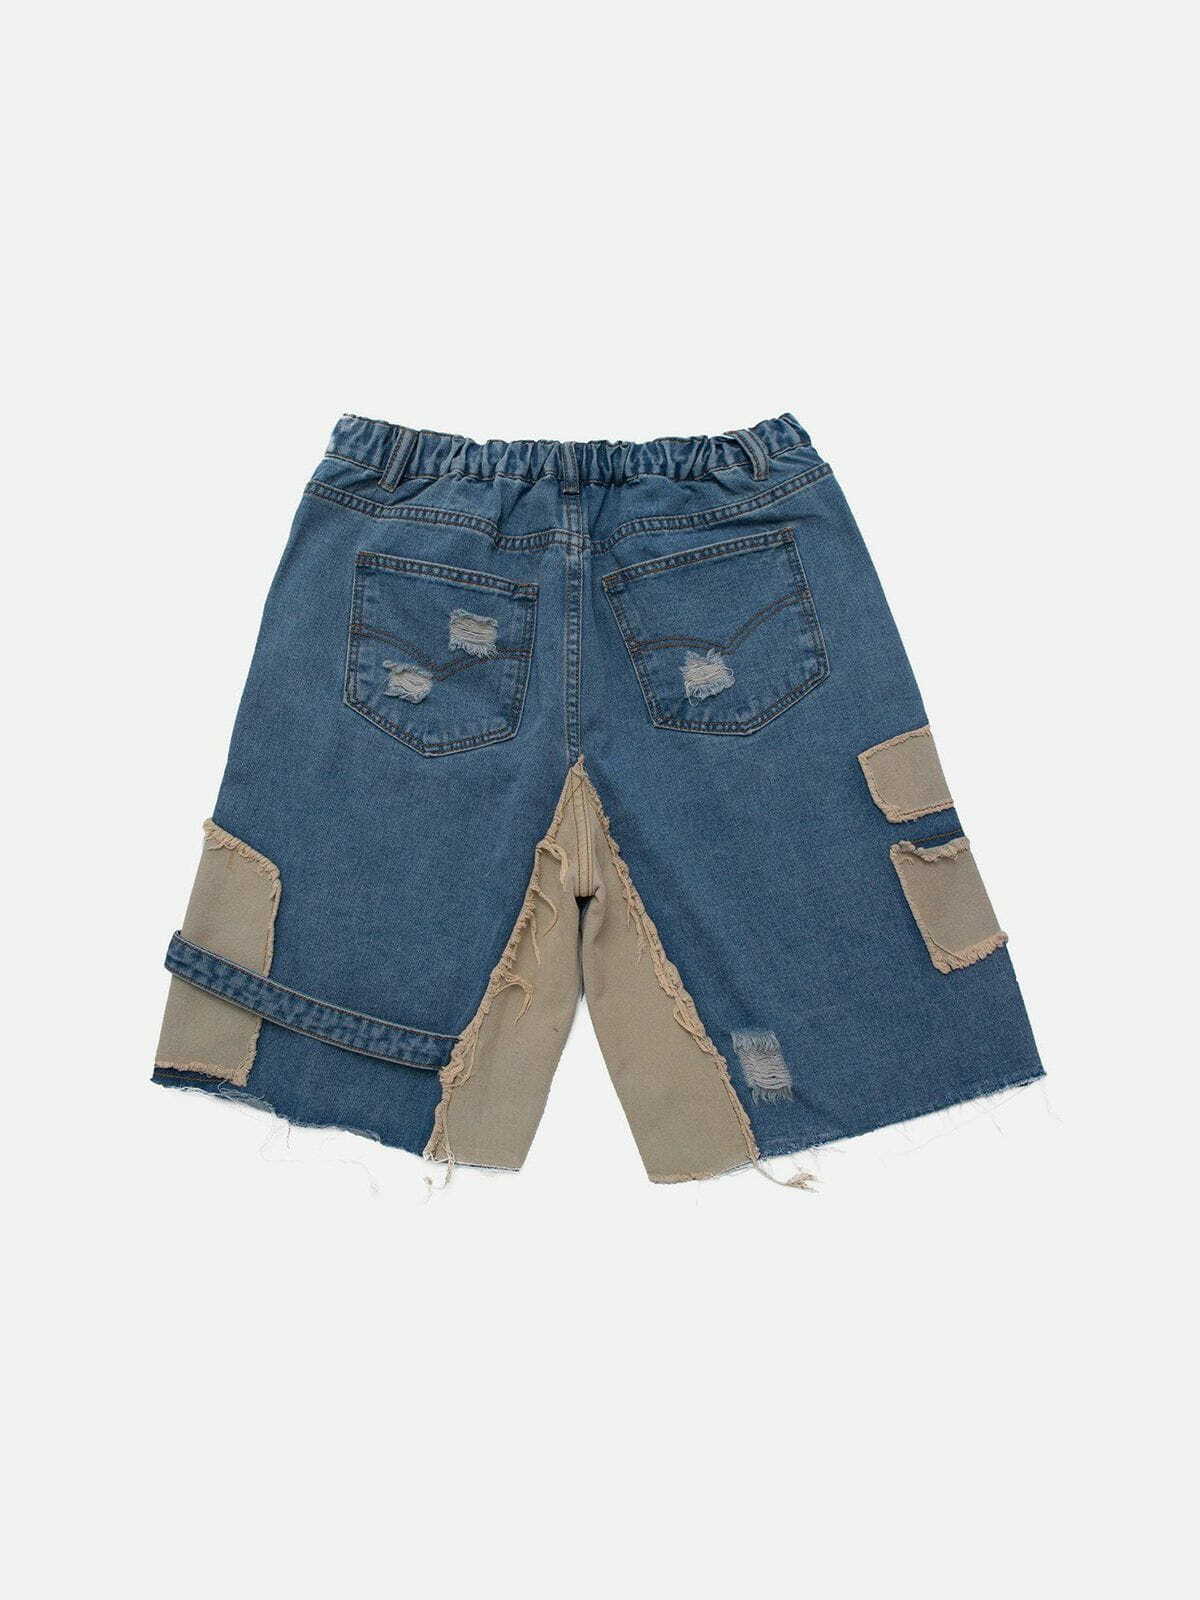 distressed denim shorts edgy urban essential 7578